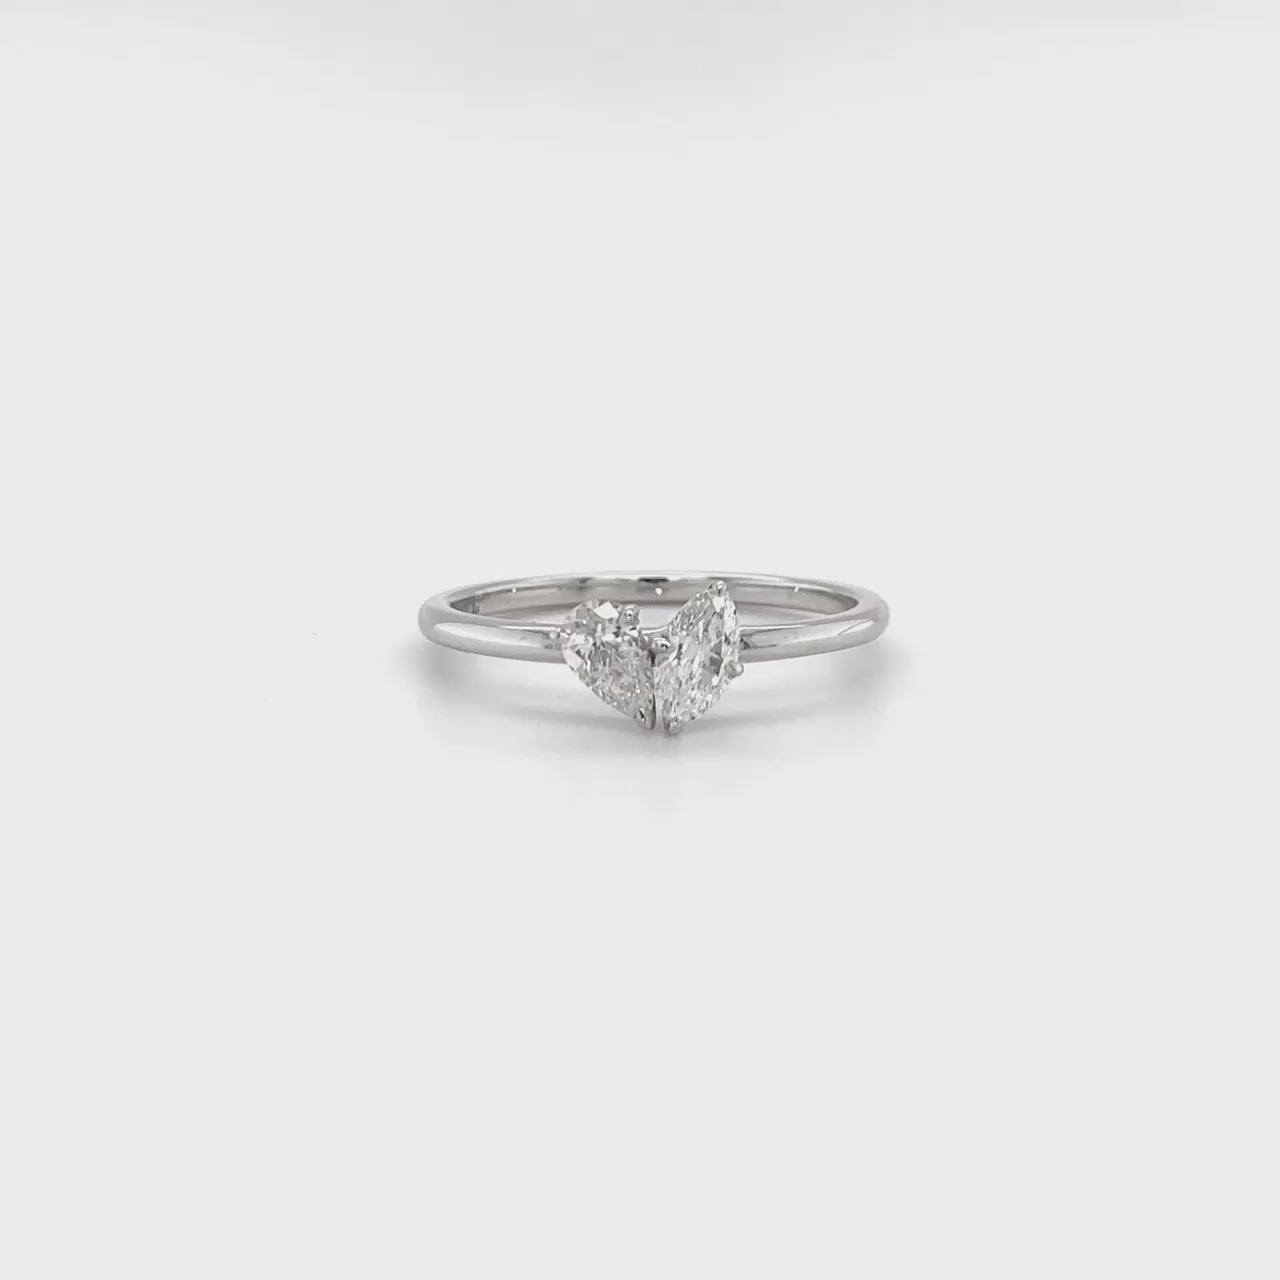 "Two stone diamond ring, Pear cut diamond ring, Marquise cut diamond ring, Elegant diamond ring, Diamond engagement ring, Sparkling diamond ring, Sophisticated diamond ring, Diamond jewelry, Fine jewelry, Luxury ring."